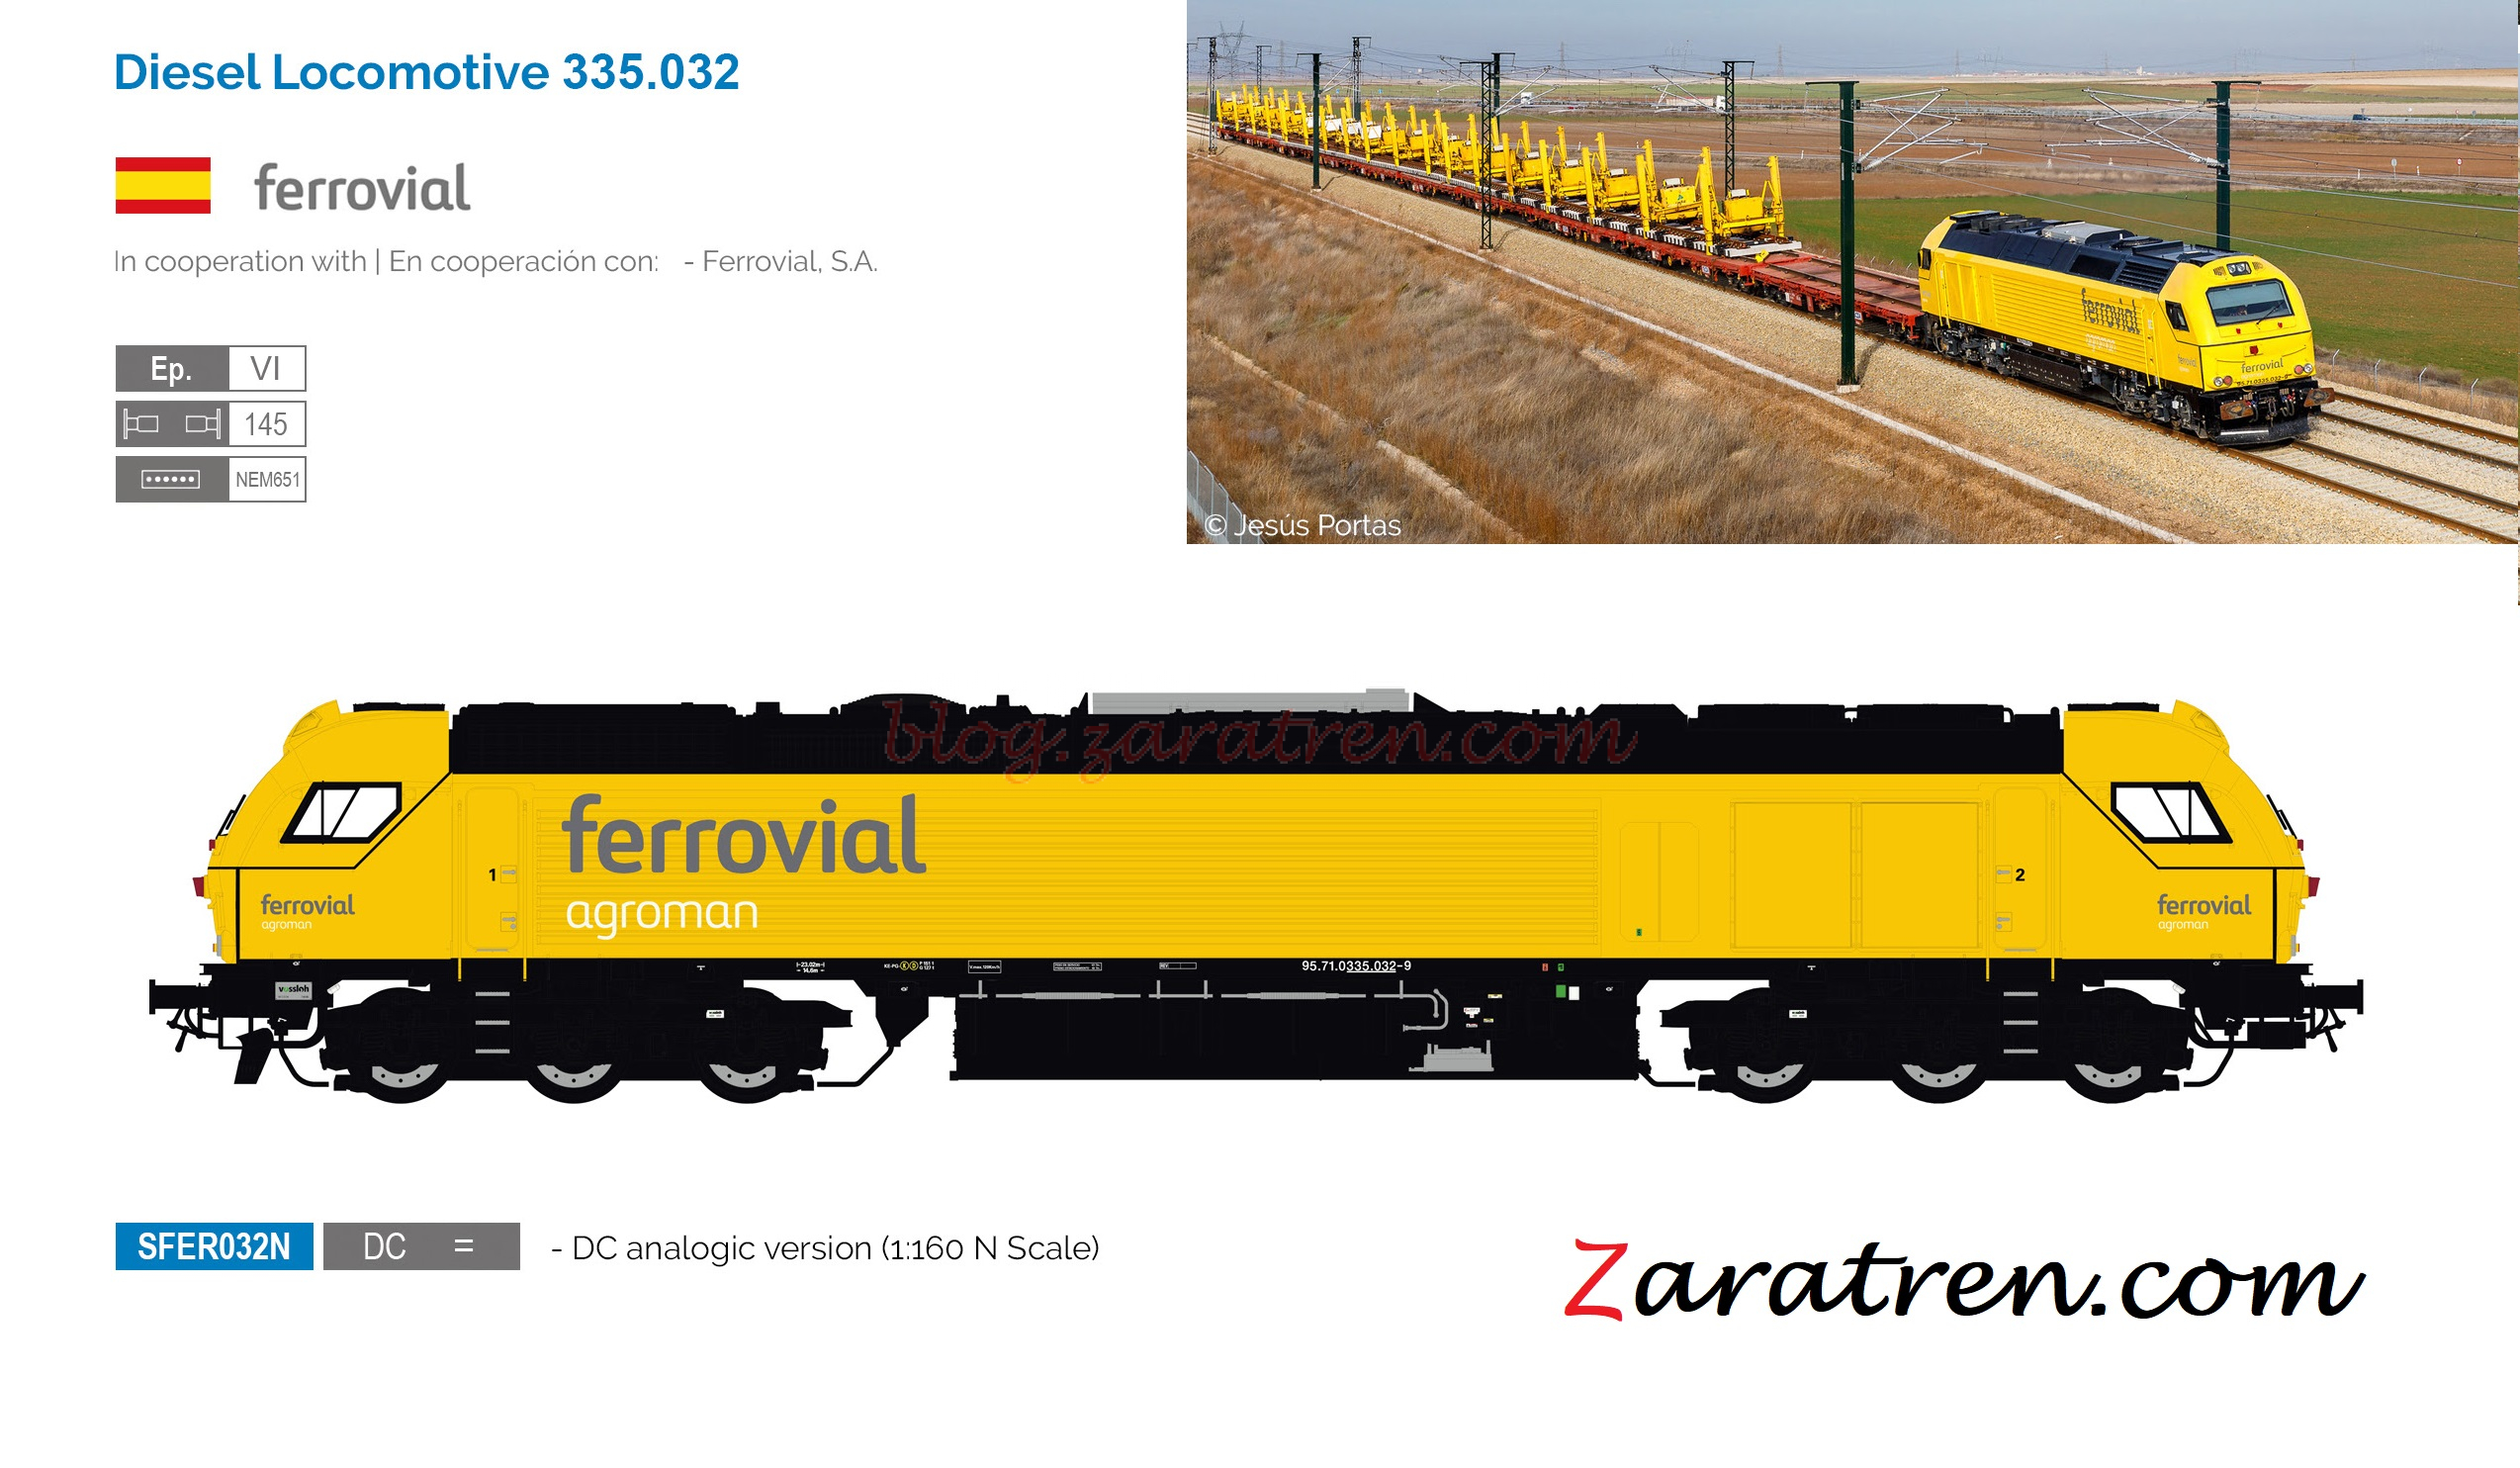 Sudexpress – Loc. Diesel Vossloh Euro 4000 Ferrovial, 335.032, Escala N. Ref: SFER032N.